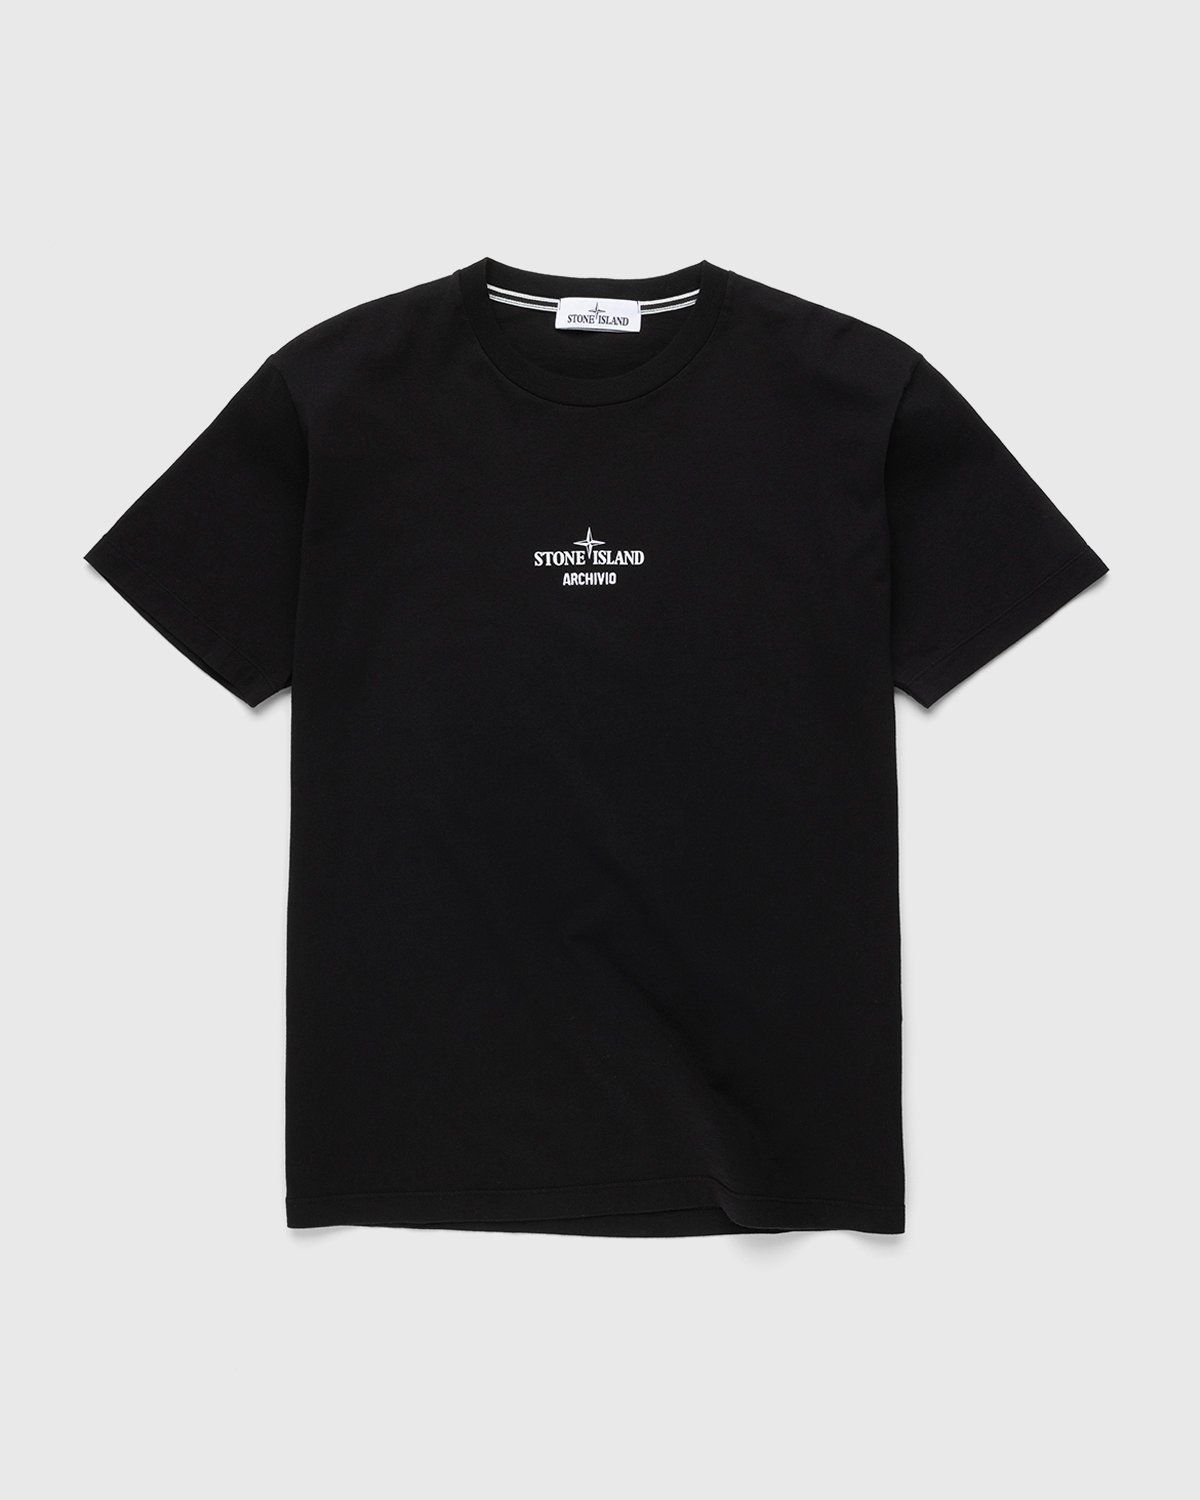 Stone Island – 2NS91 Garment-Dyed Archivio T-Shirt Black  - Image 1